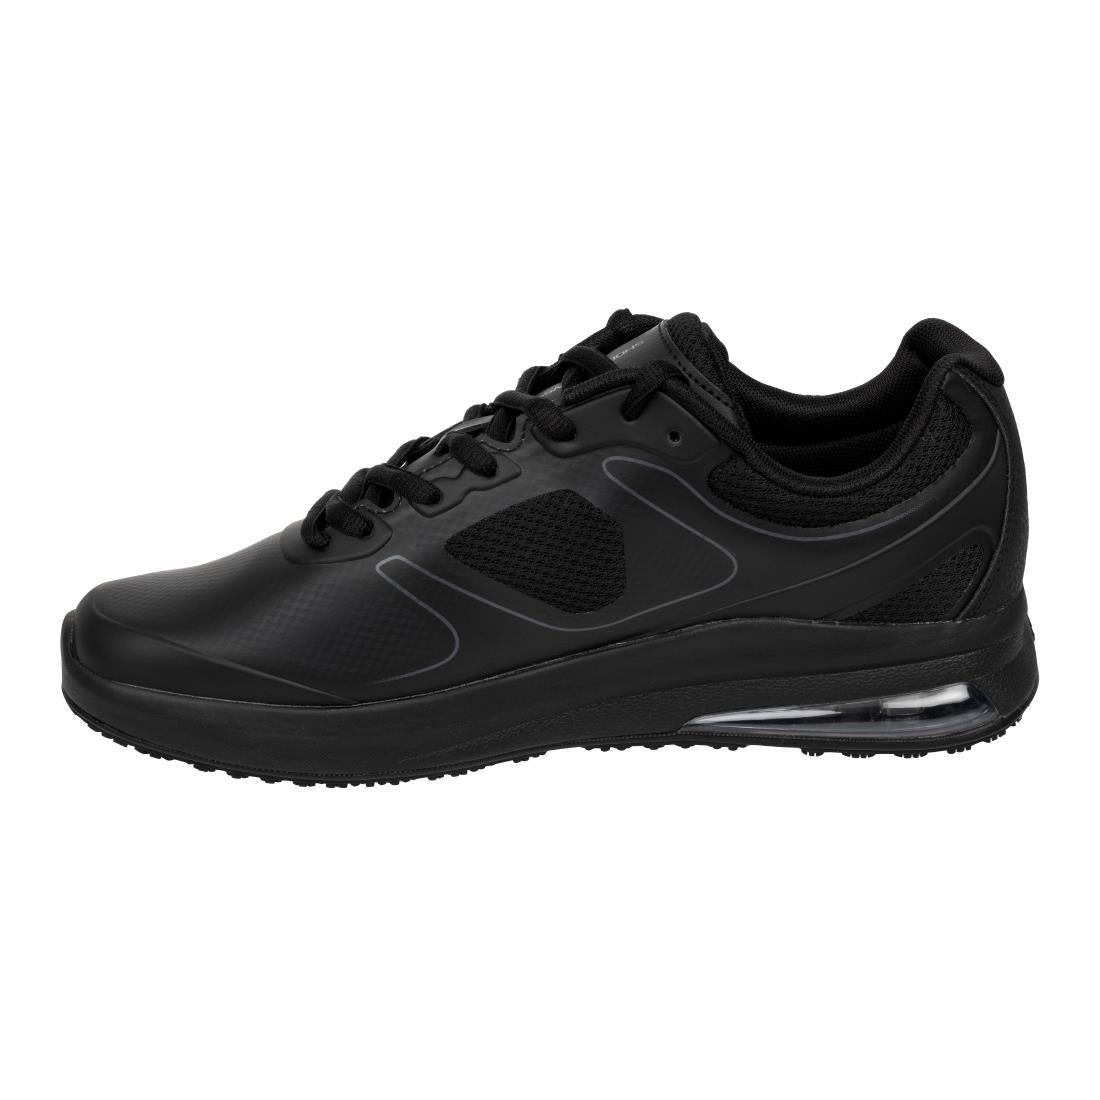 BB586-41 Shoes for Crews Men's Evolution Trainers Black Size 41